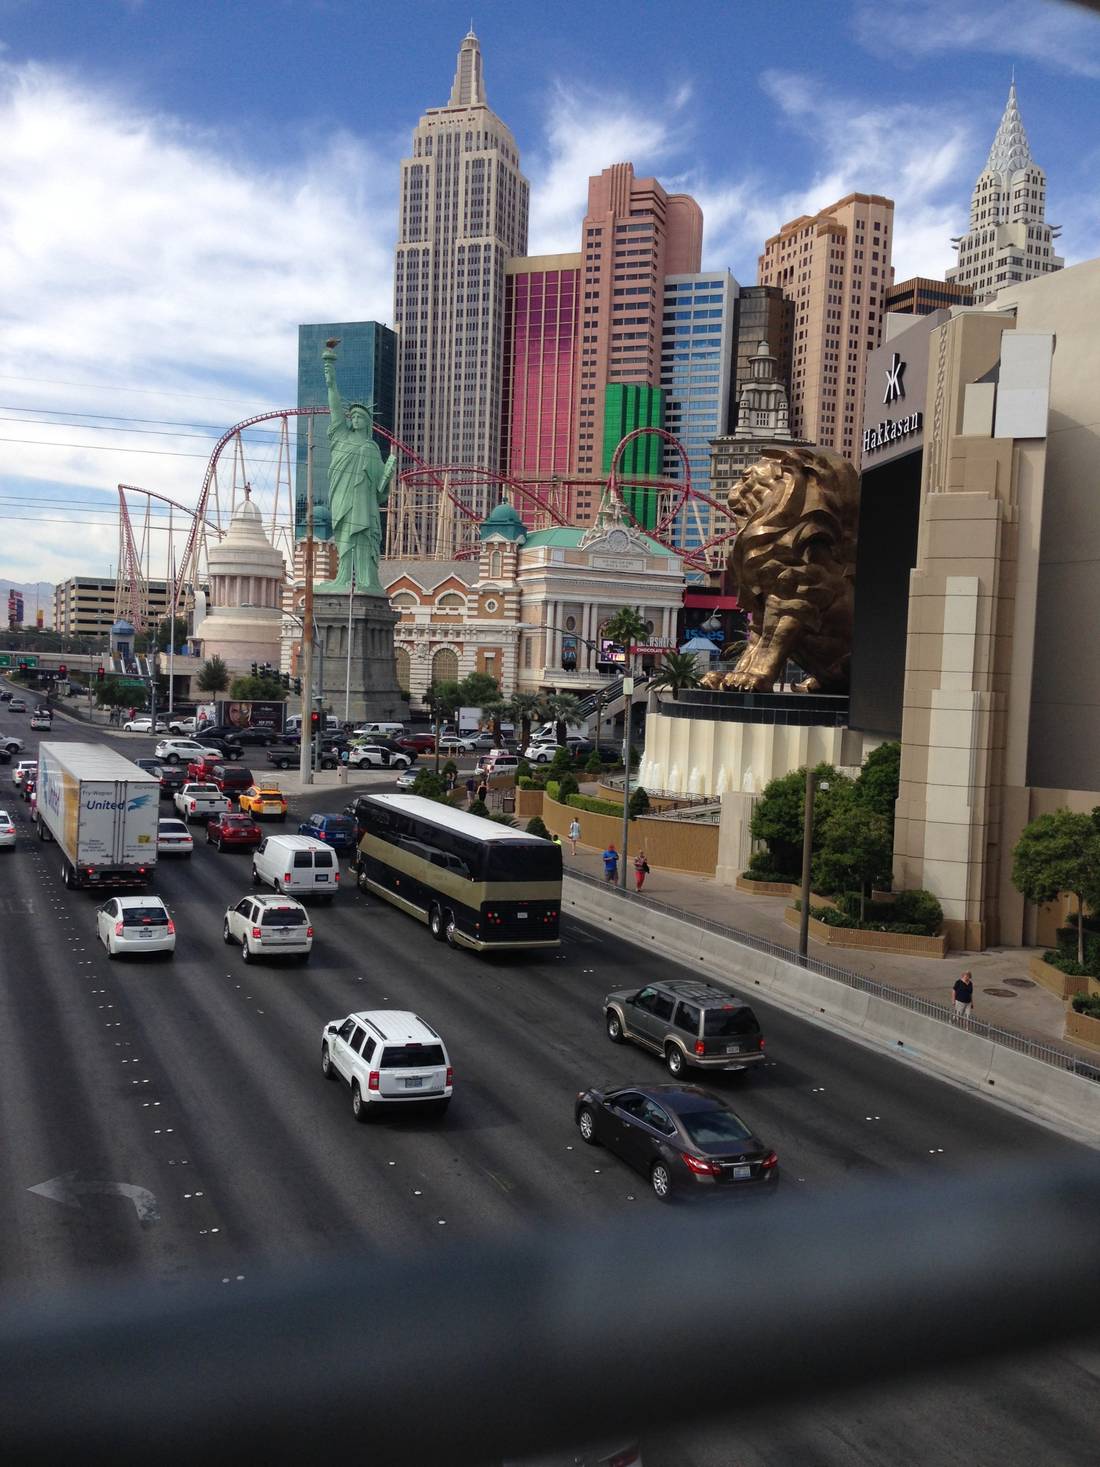 The Las Vegas Strip - the most famous street in Las Vegas, USA